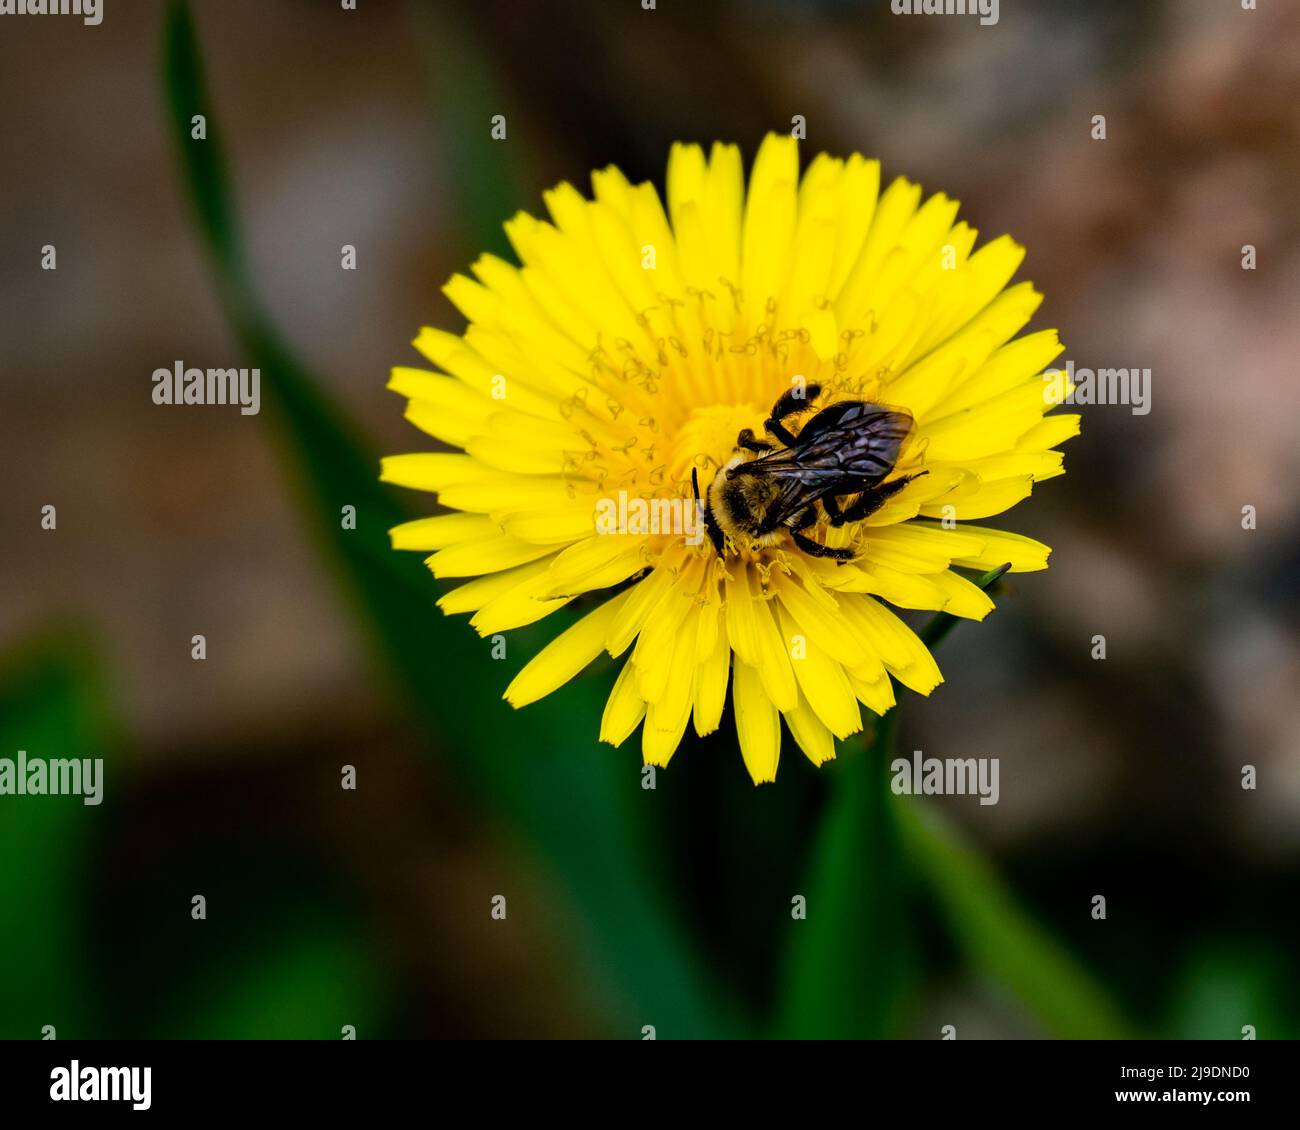 A bumblebee pollinating a dandelion  in a garden in spring Stock Photo